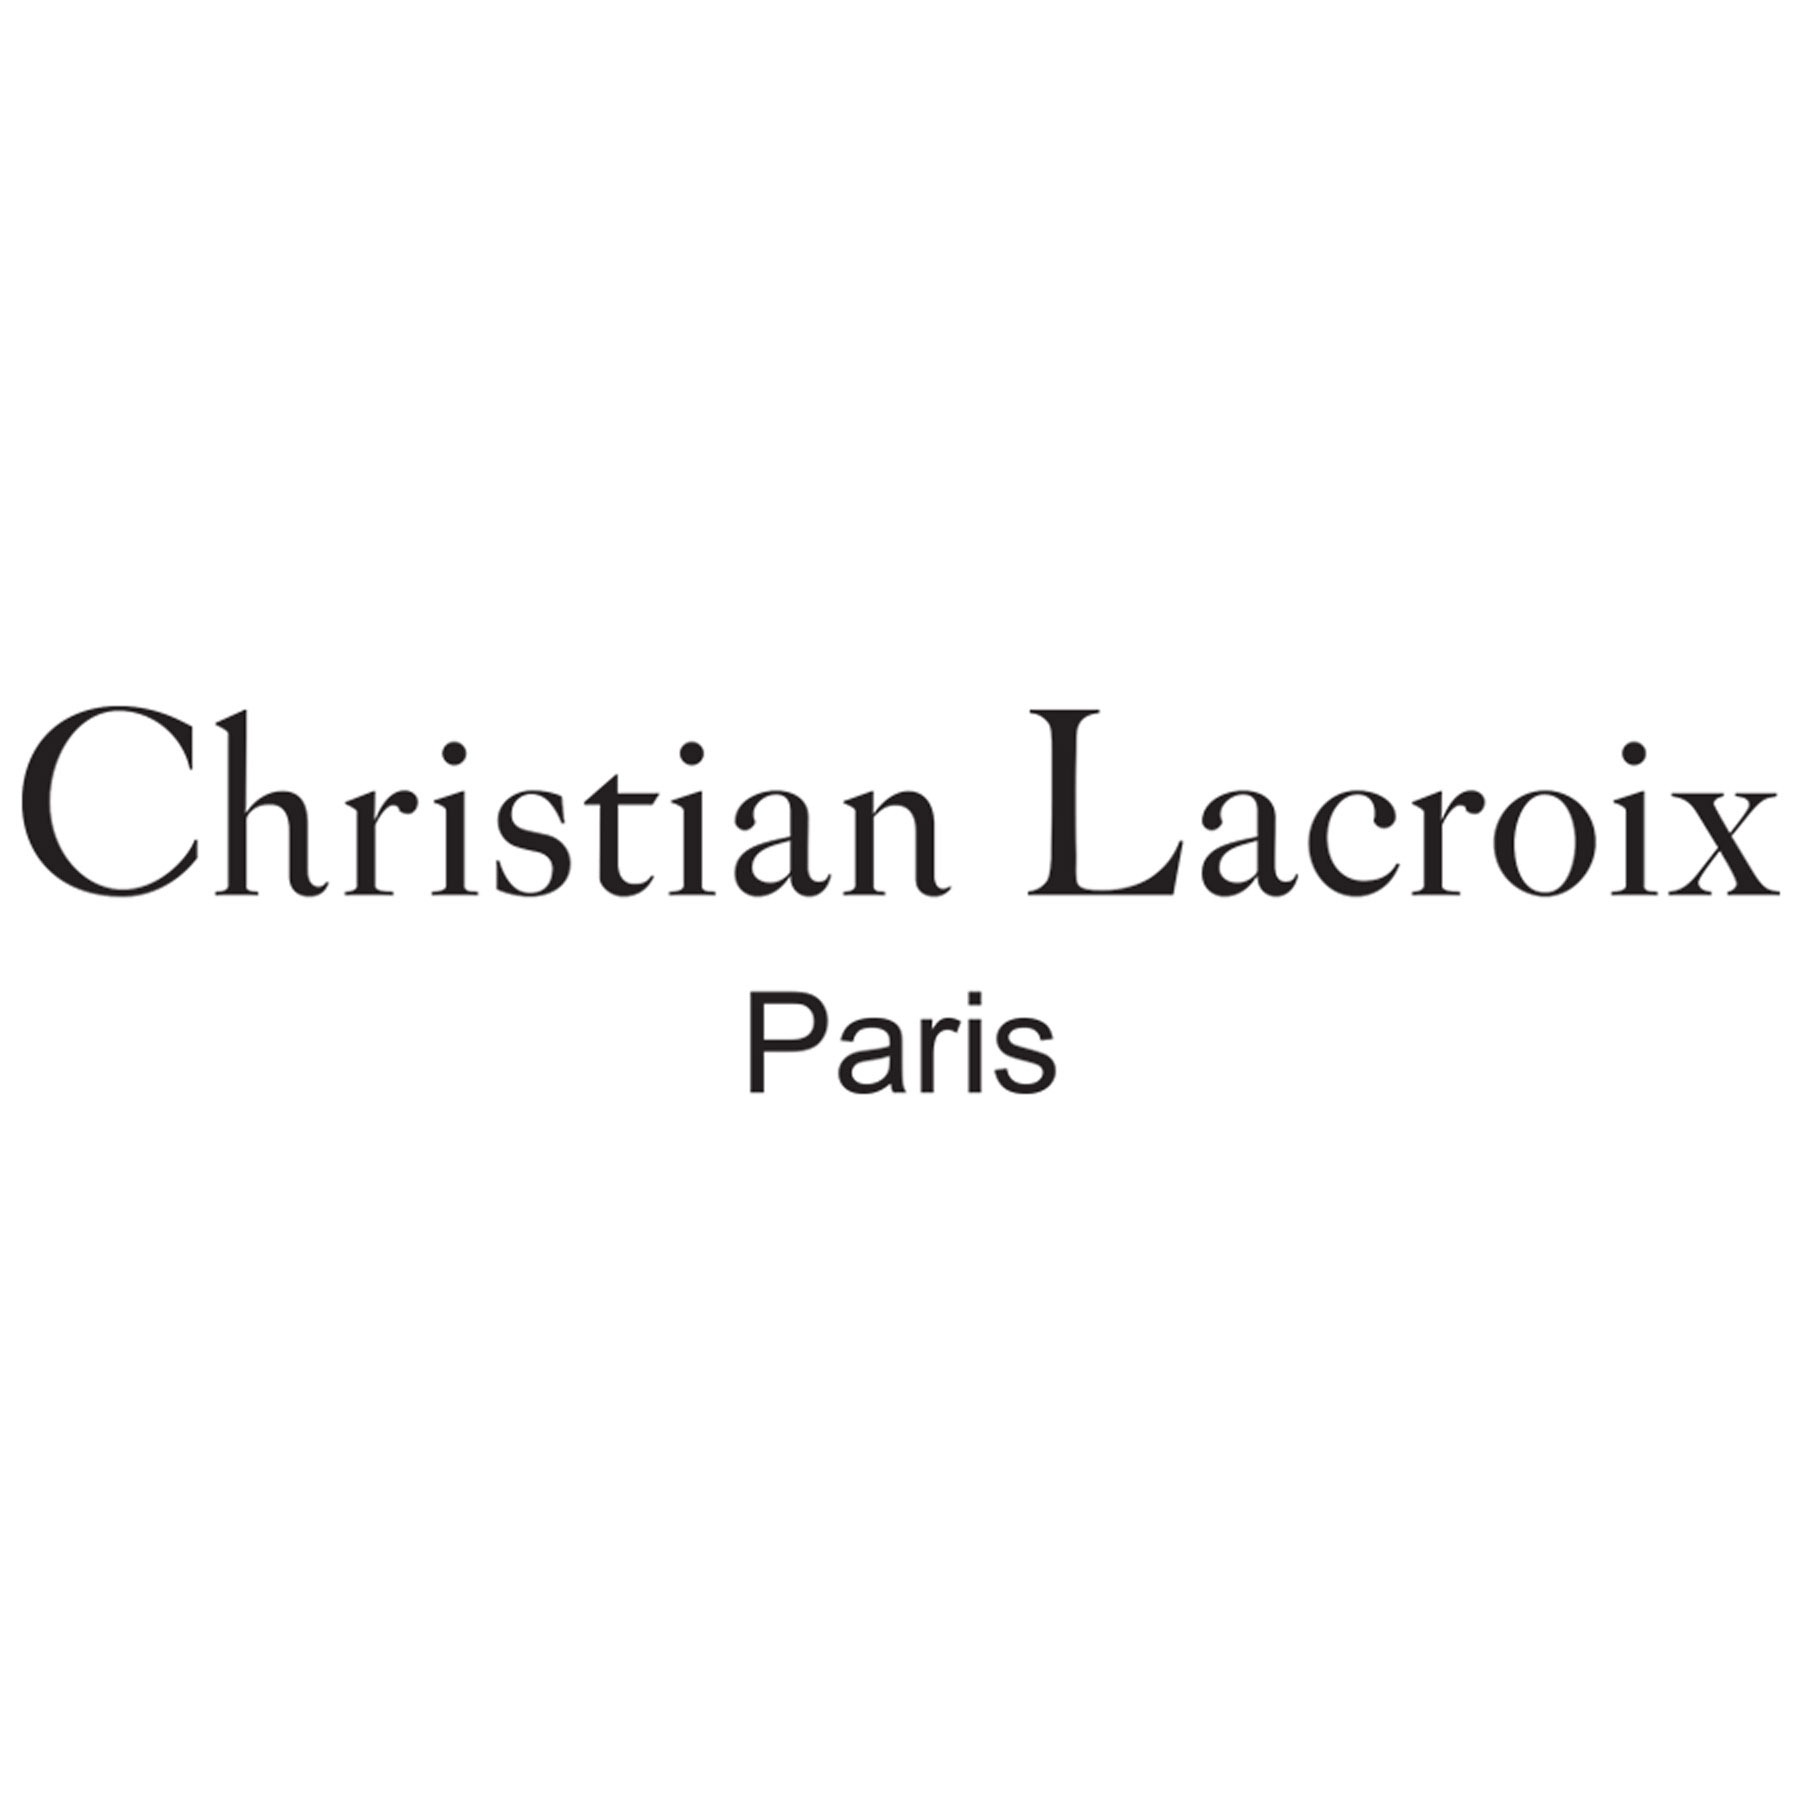 Themes - Christian Lacroix